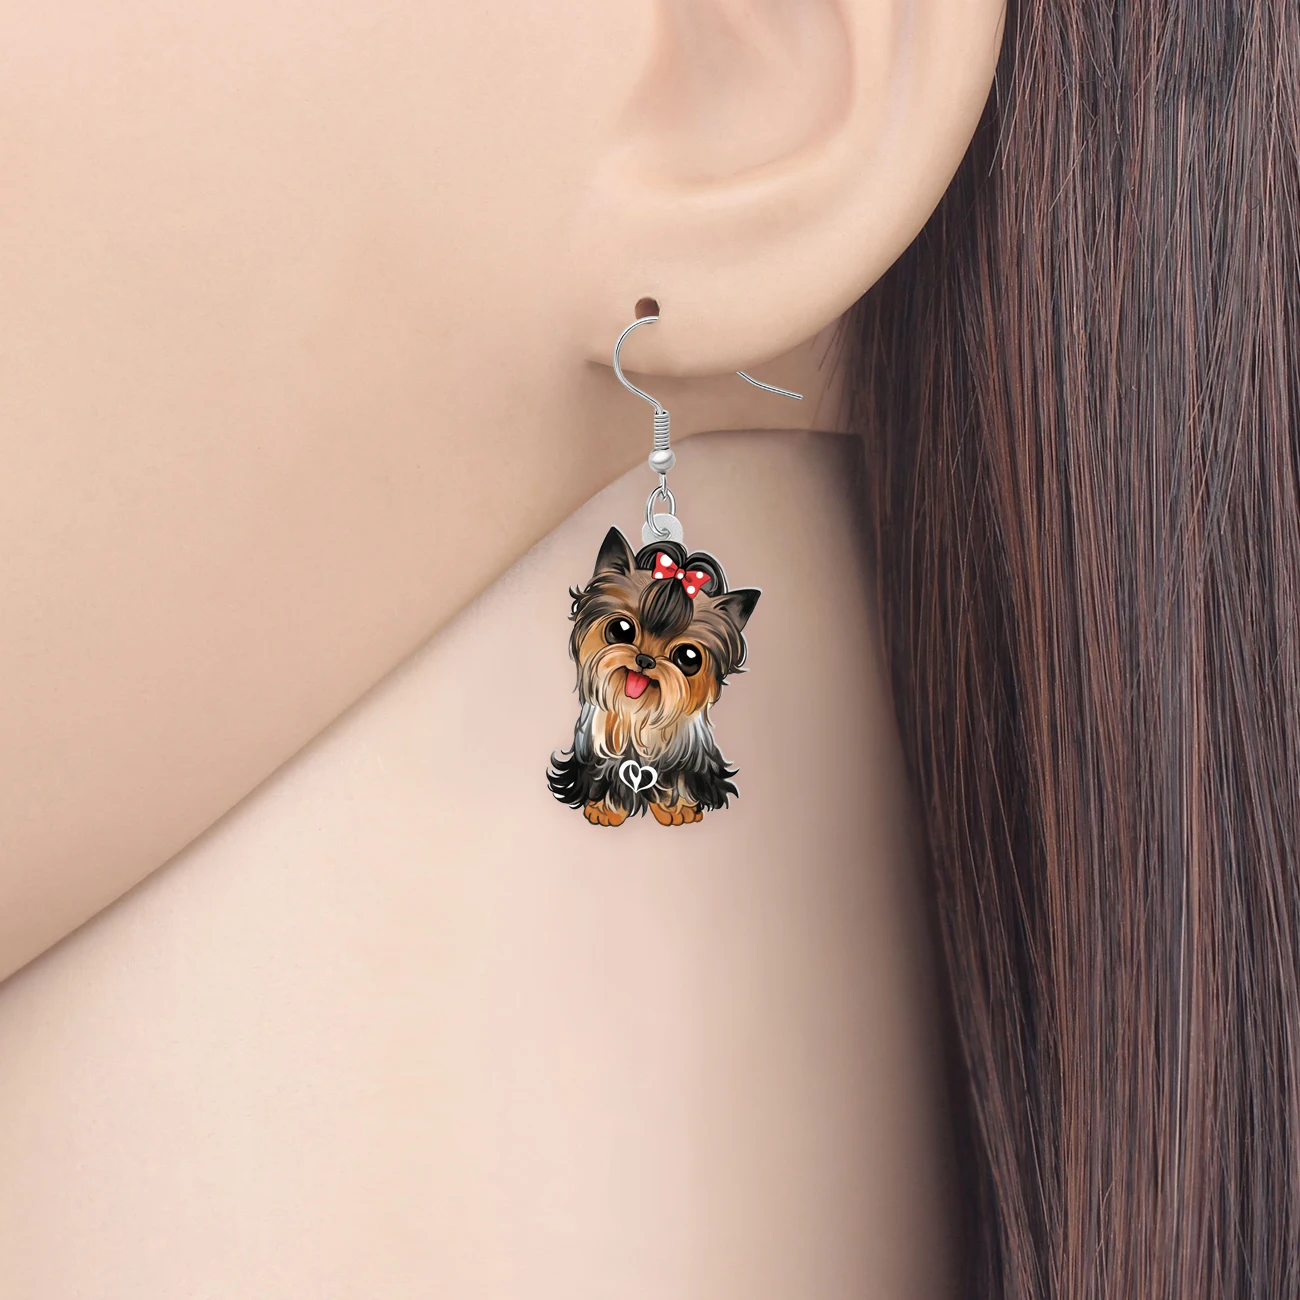 BONANY Acrylic Sweet Yorkshire Terrier Dog Earrings Drop Dangle for Women Girls Kids Teens Birthday Charms Pets Jewelry Gifts